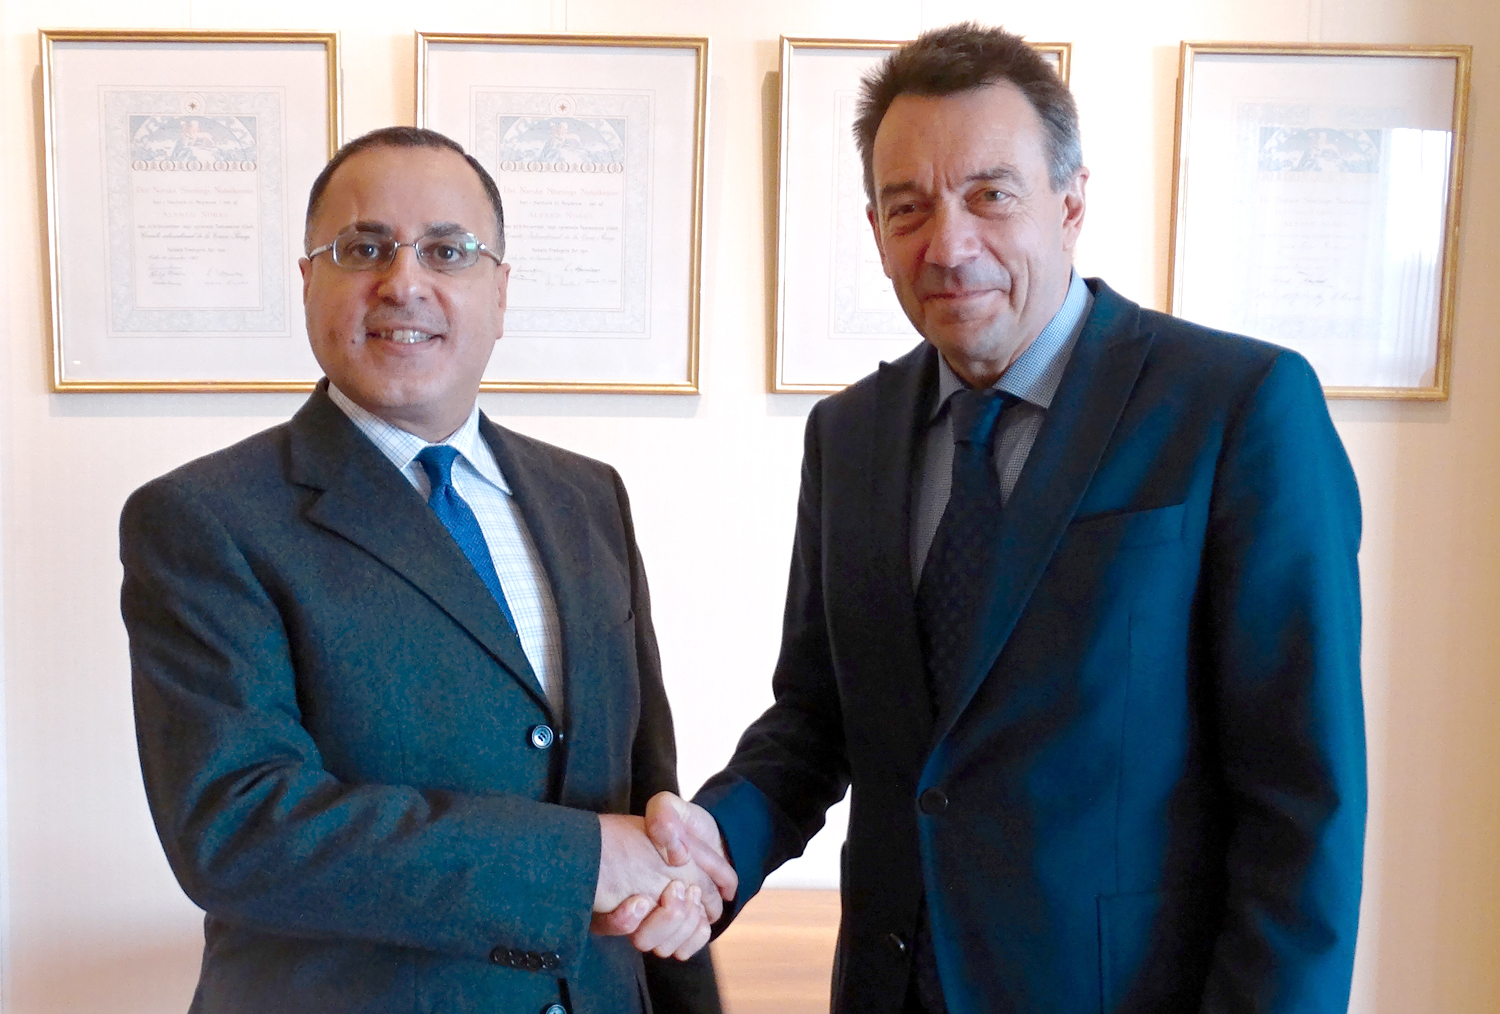 Kuwait permanent representative to UN and International Organizations in Geneva Jamal Al-Ghunaim with ICRC's President Peter Maurer